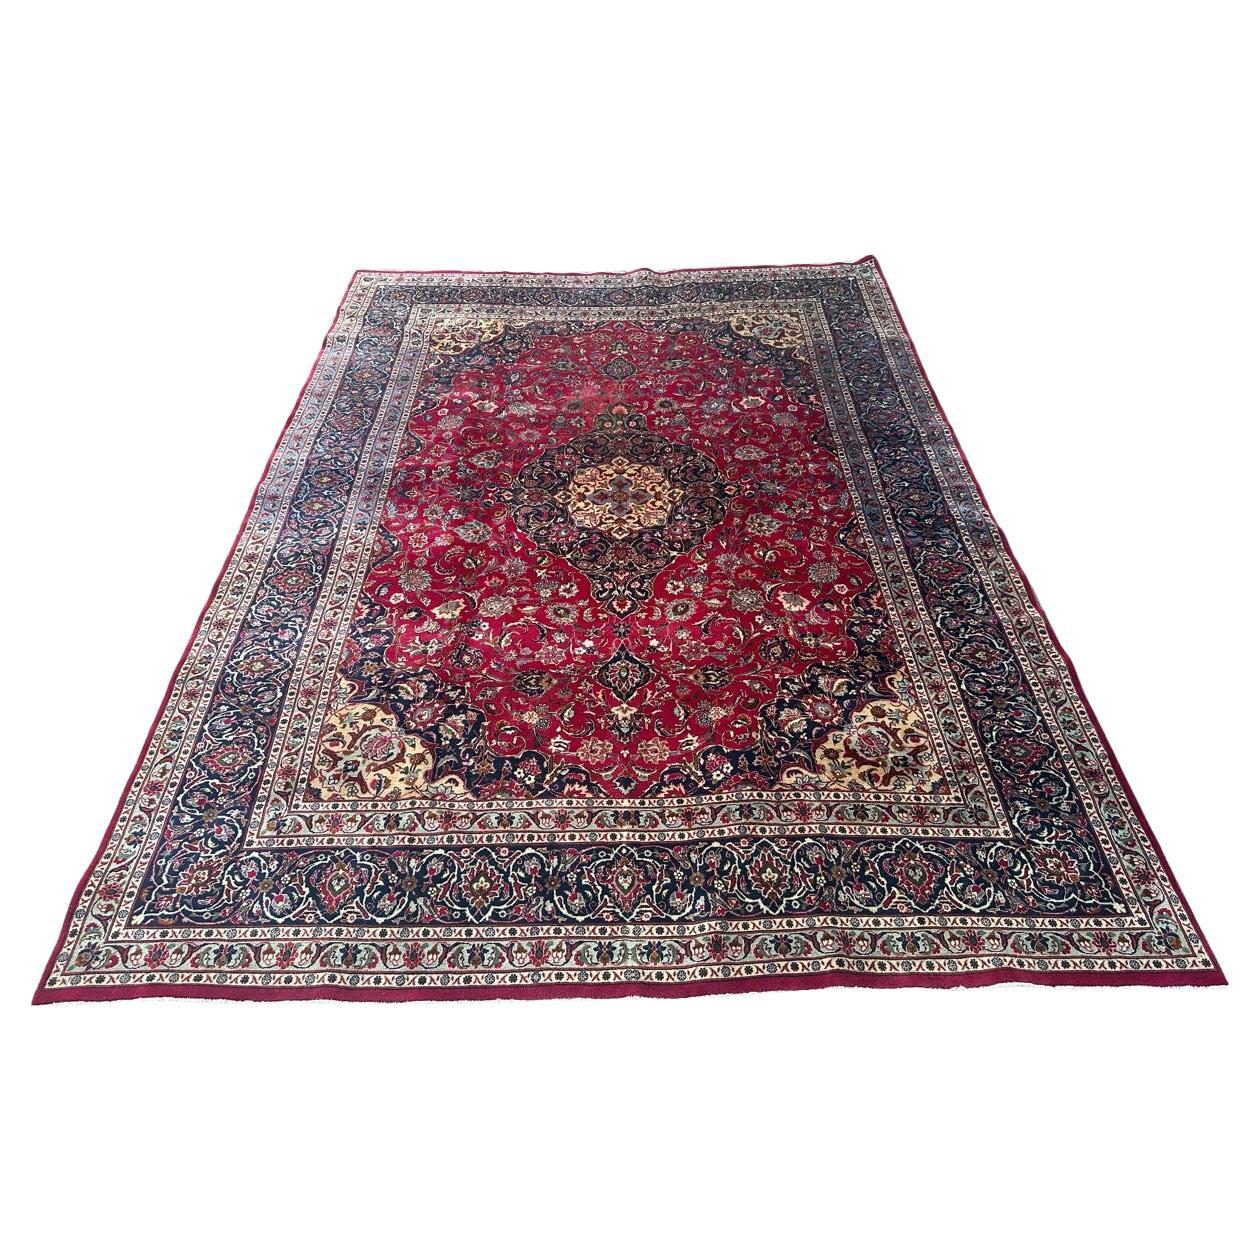 Bobyrug's nice vintage large kashan rug en vente